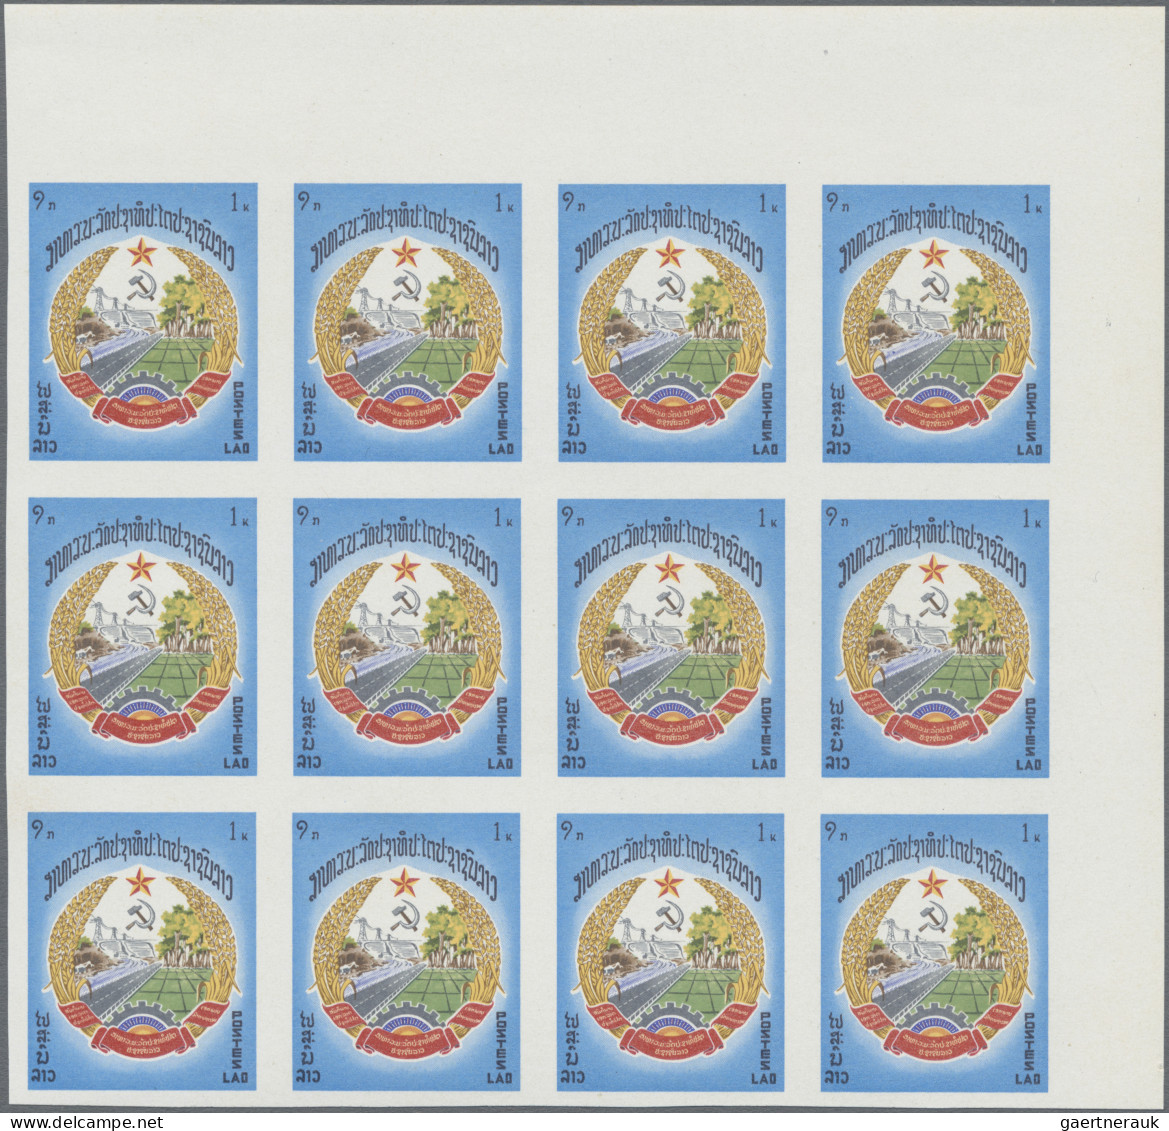 Laos: 1976 '1st Anniv. of Dem. Republic' cpl. set of five in top right corner bl